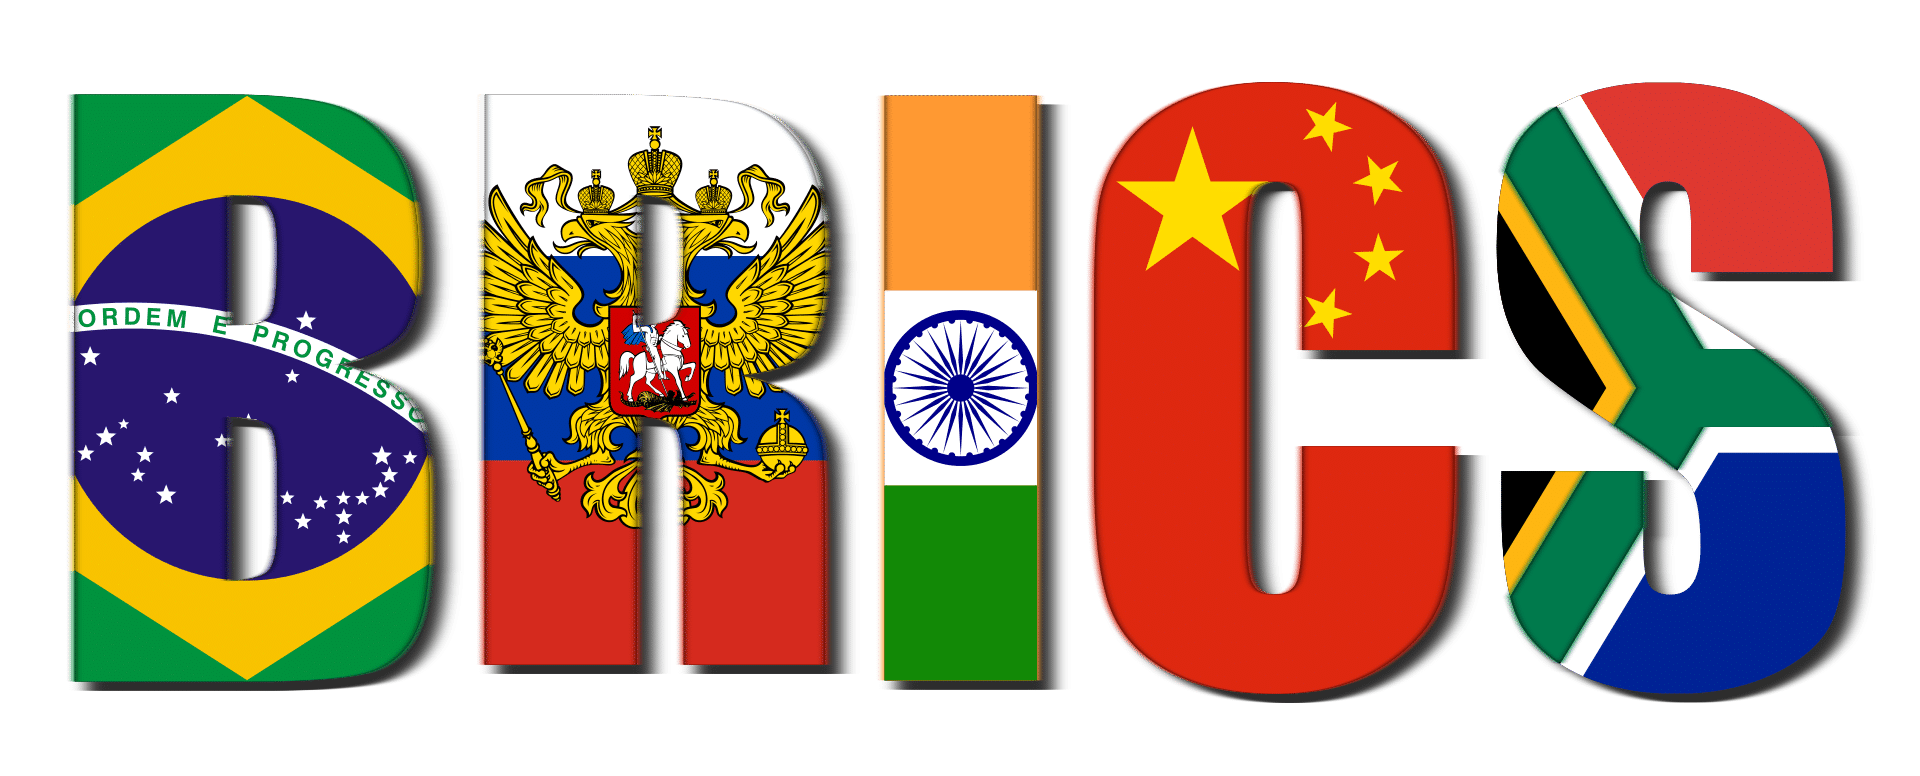 BRICS Set to Open Doors to New Members, Eyes De-Dollarization